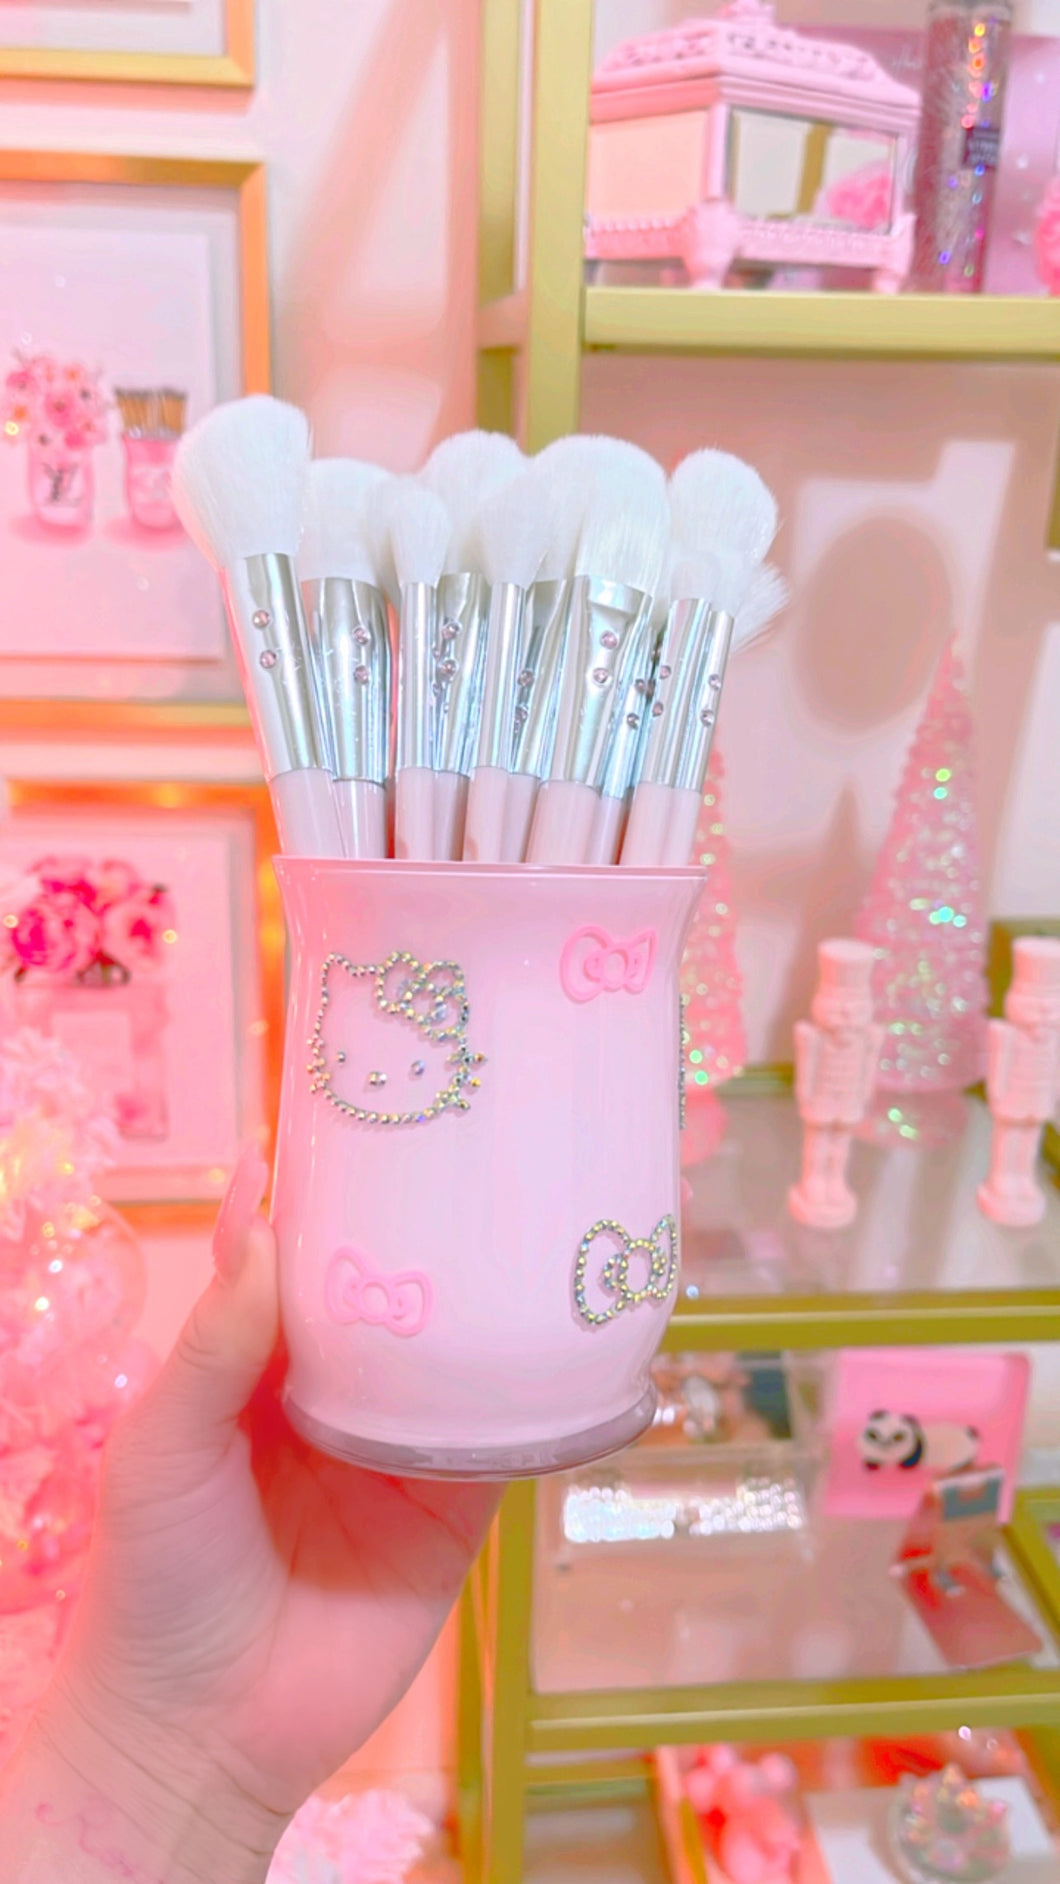 Glam Hello Kitty Brush Holder